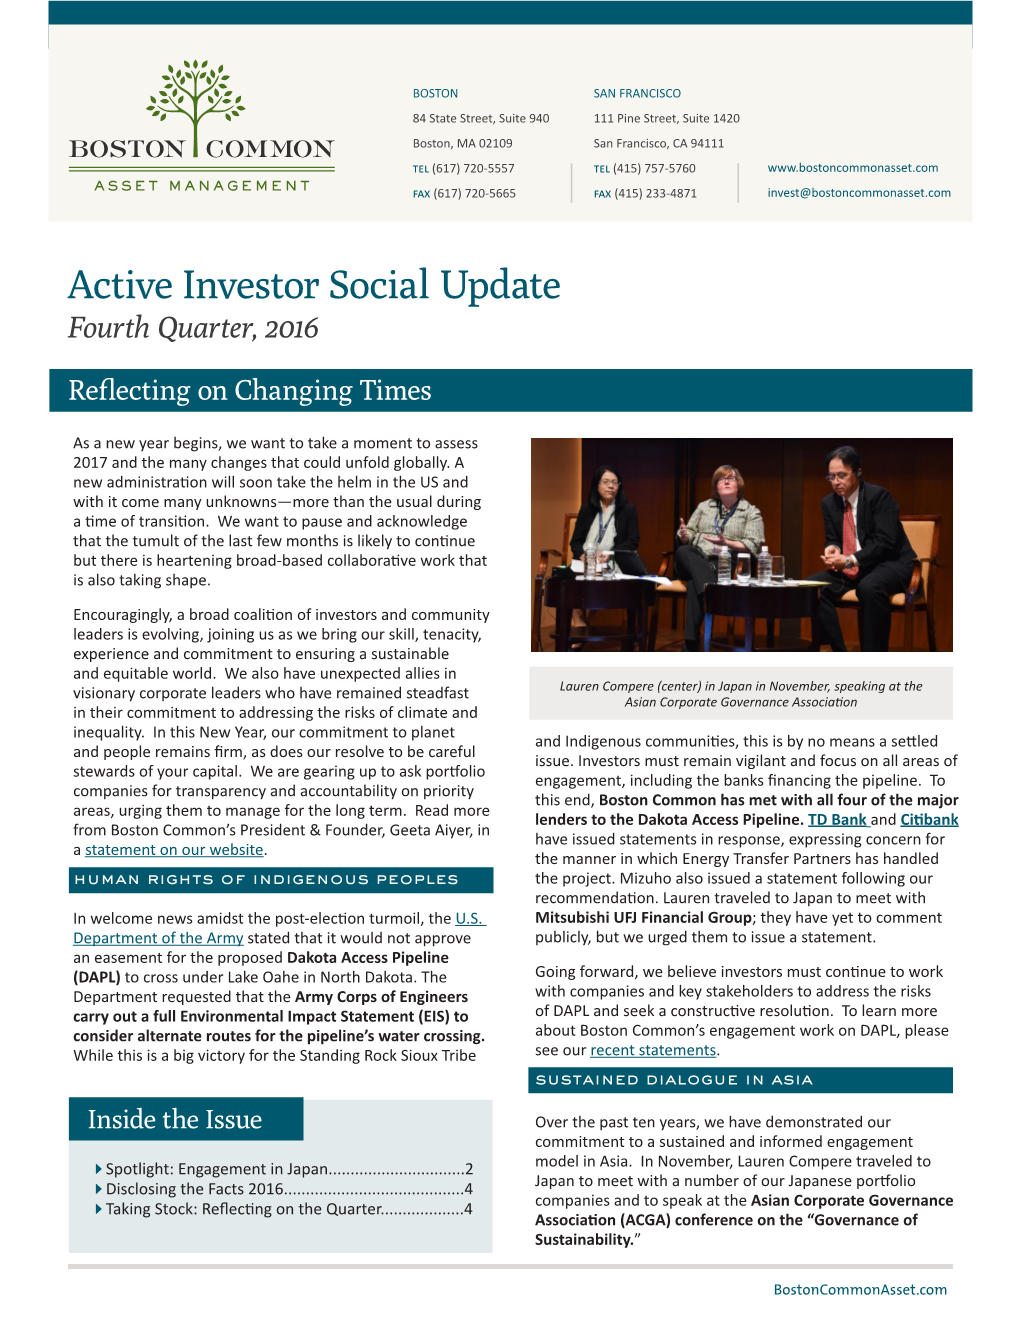 Active Investor Social Update Fourth Quarter, 2016